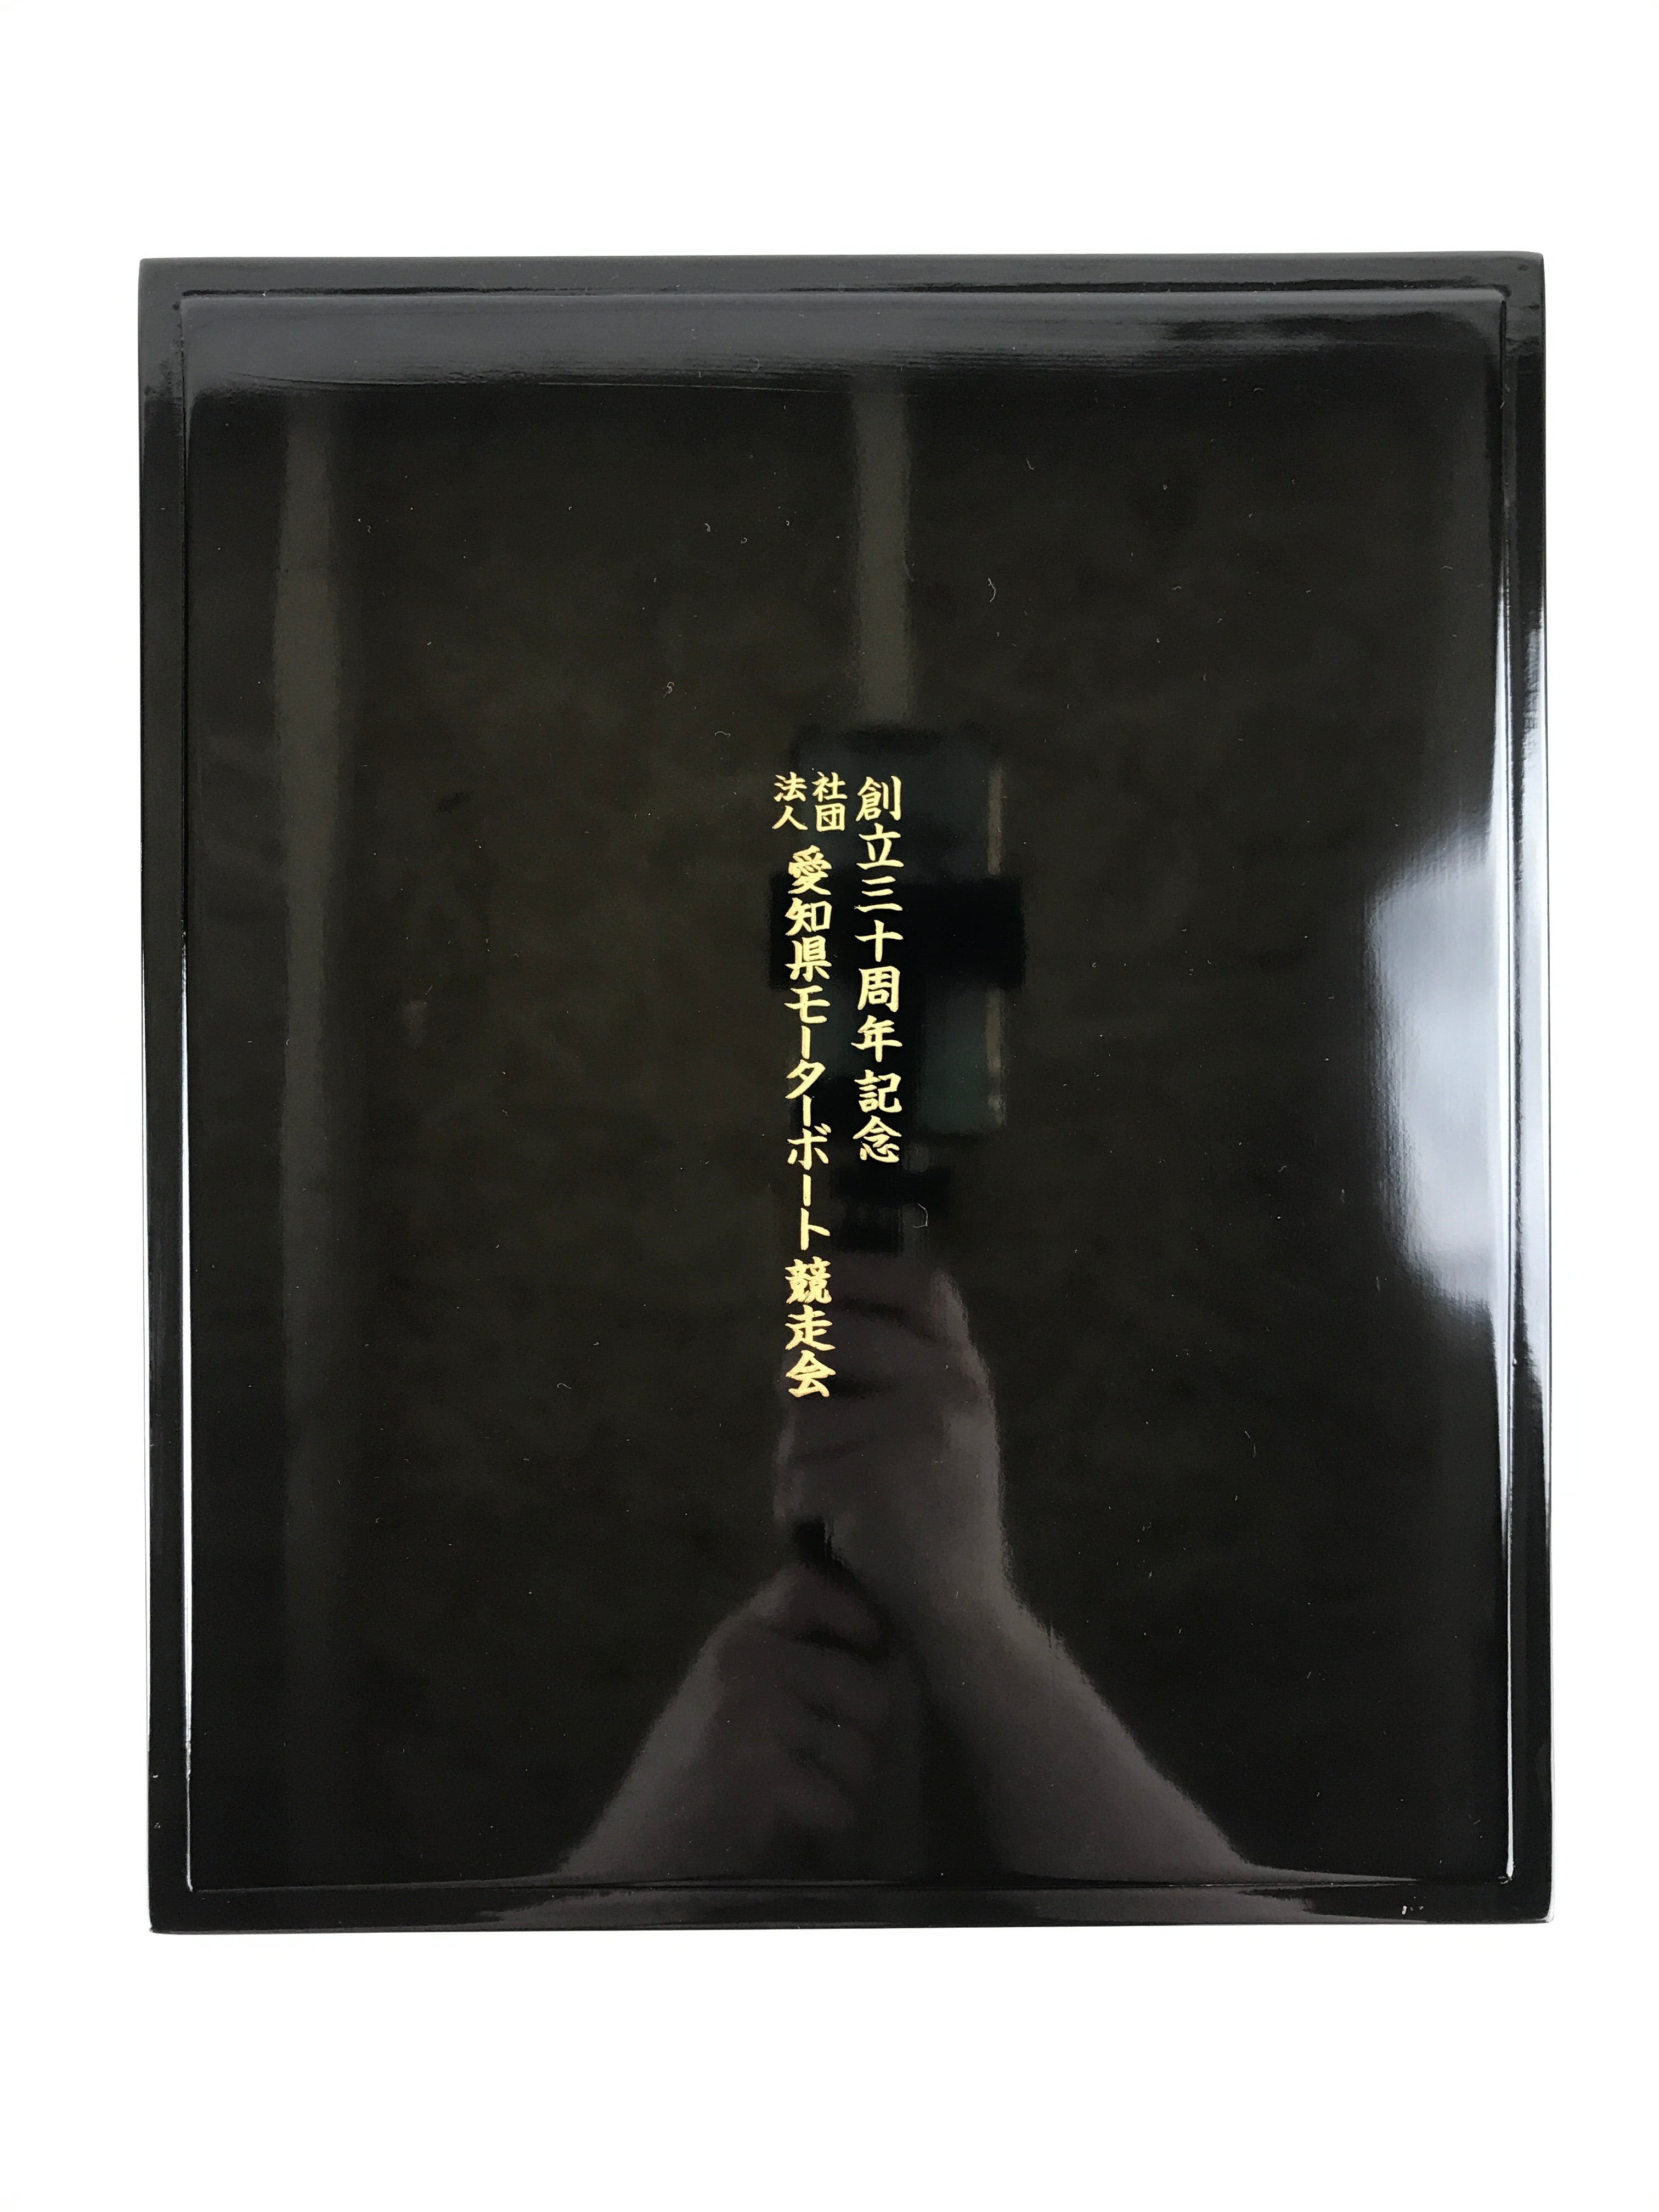 Japanese Lacquerware Lidded Box Wood Fumibako Letter Book Butsudan Black LWB54